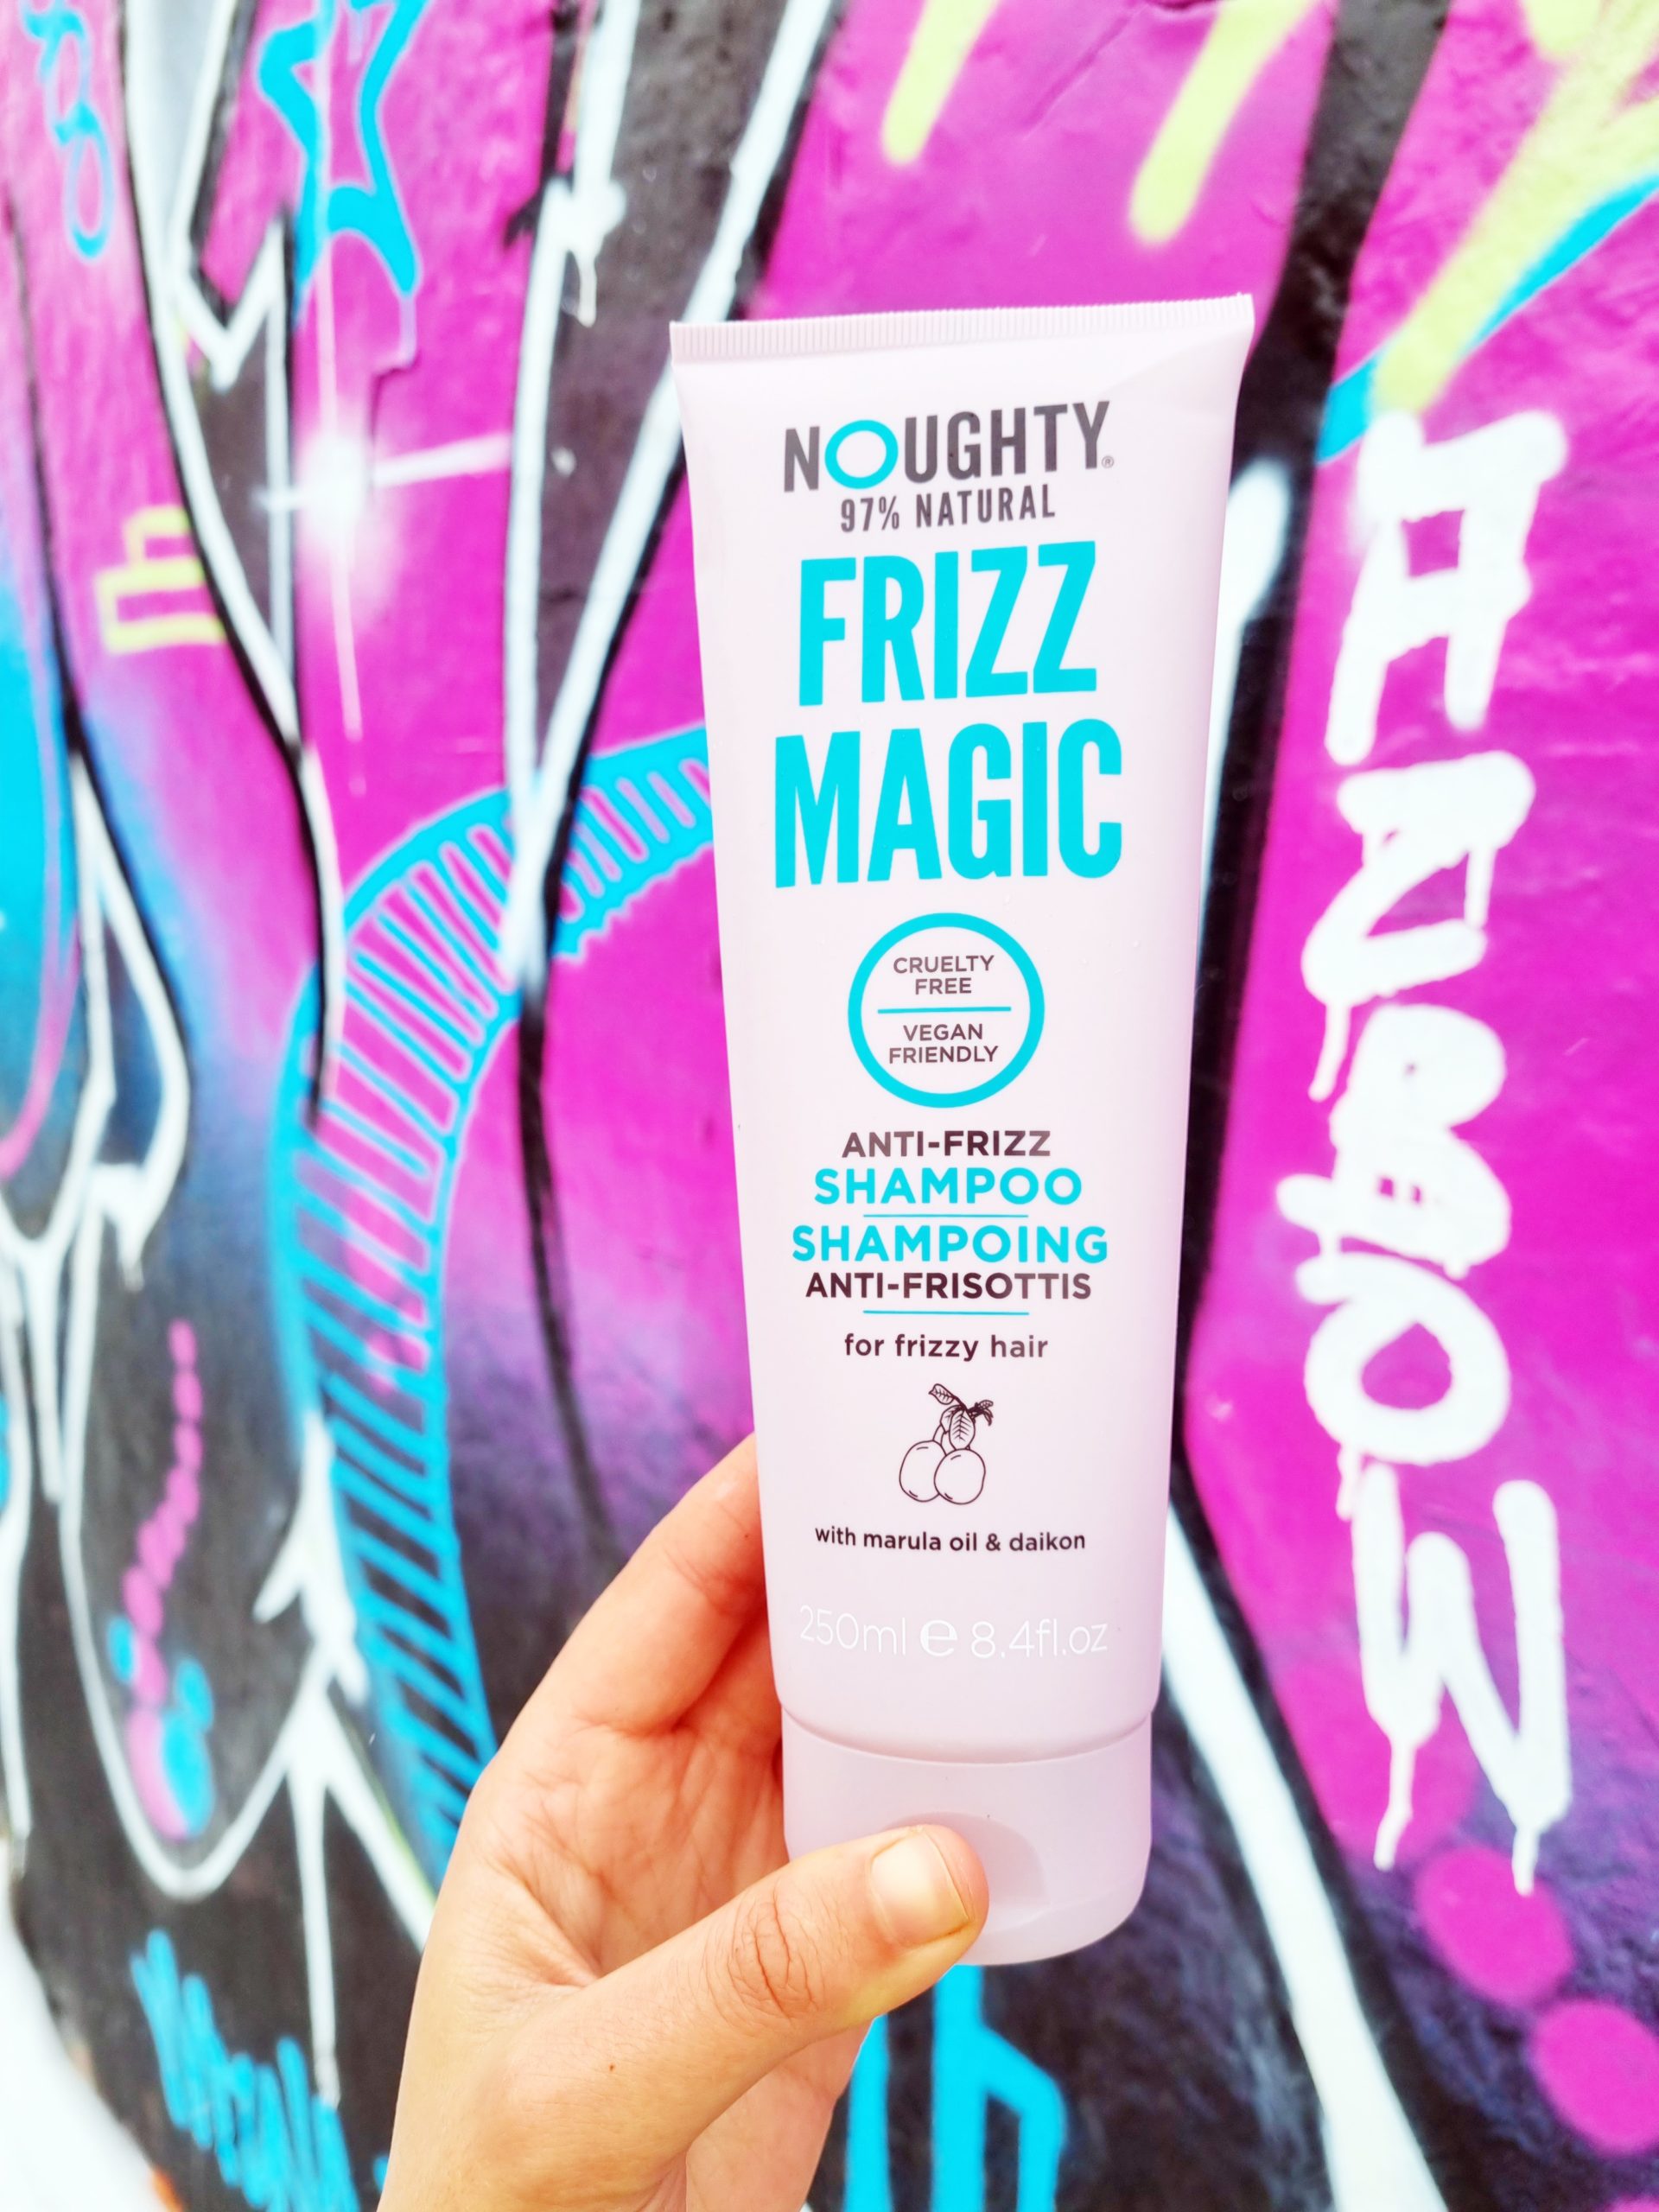 <img src="noughty.jpg" alt="noughty frizz magic shampoo"/> 